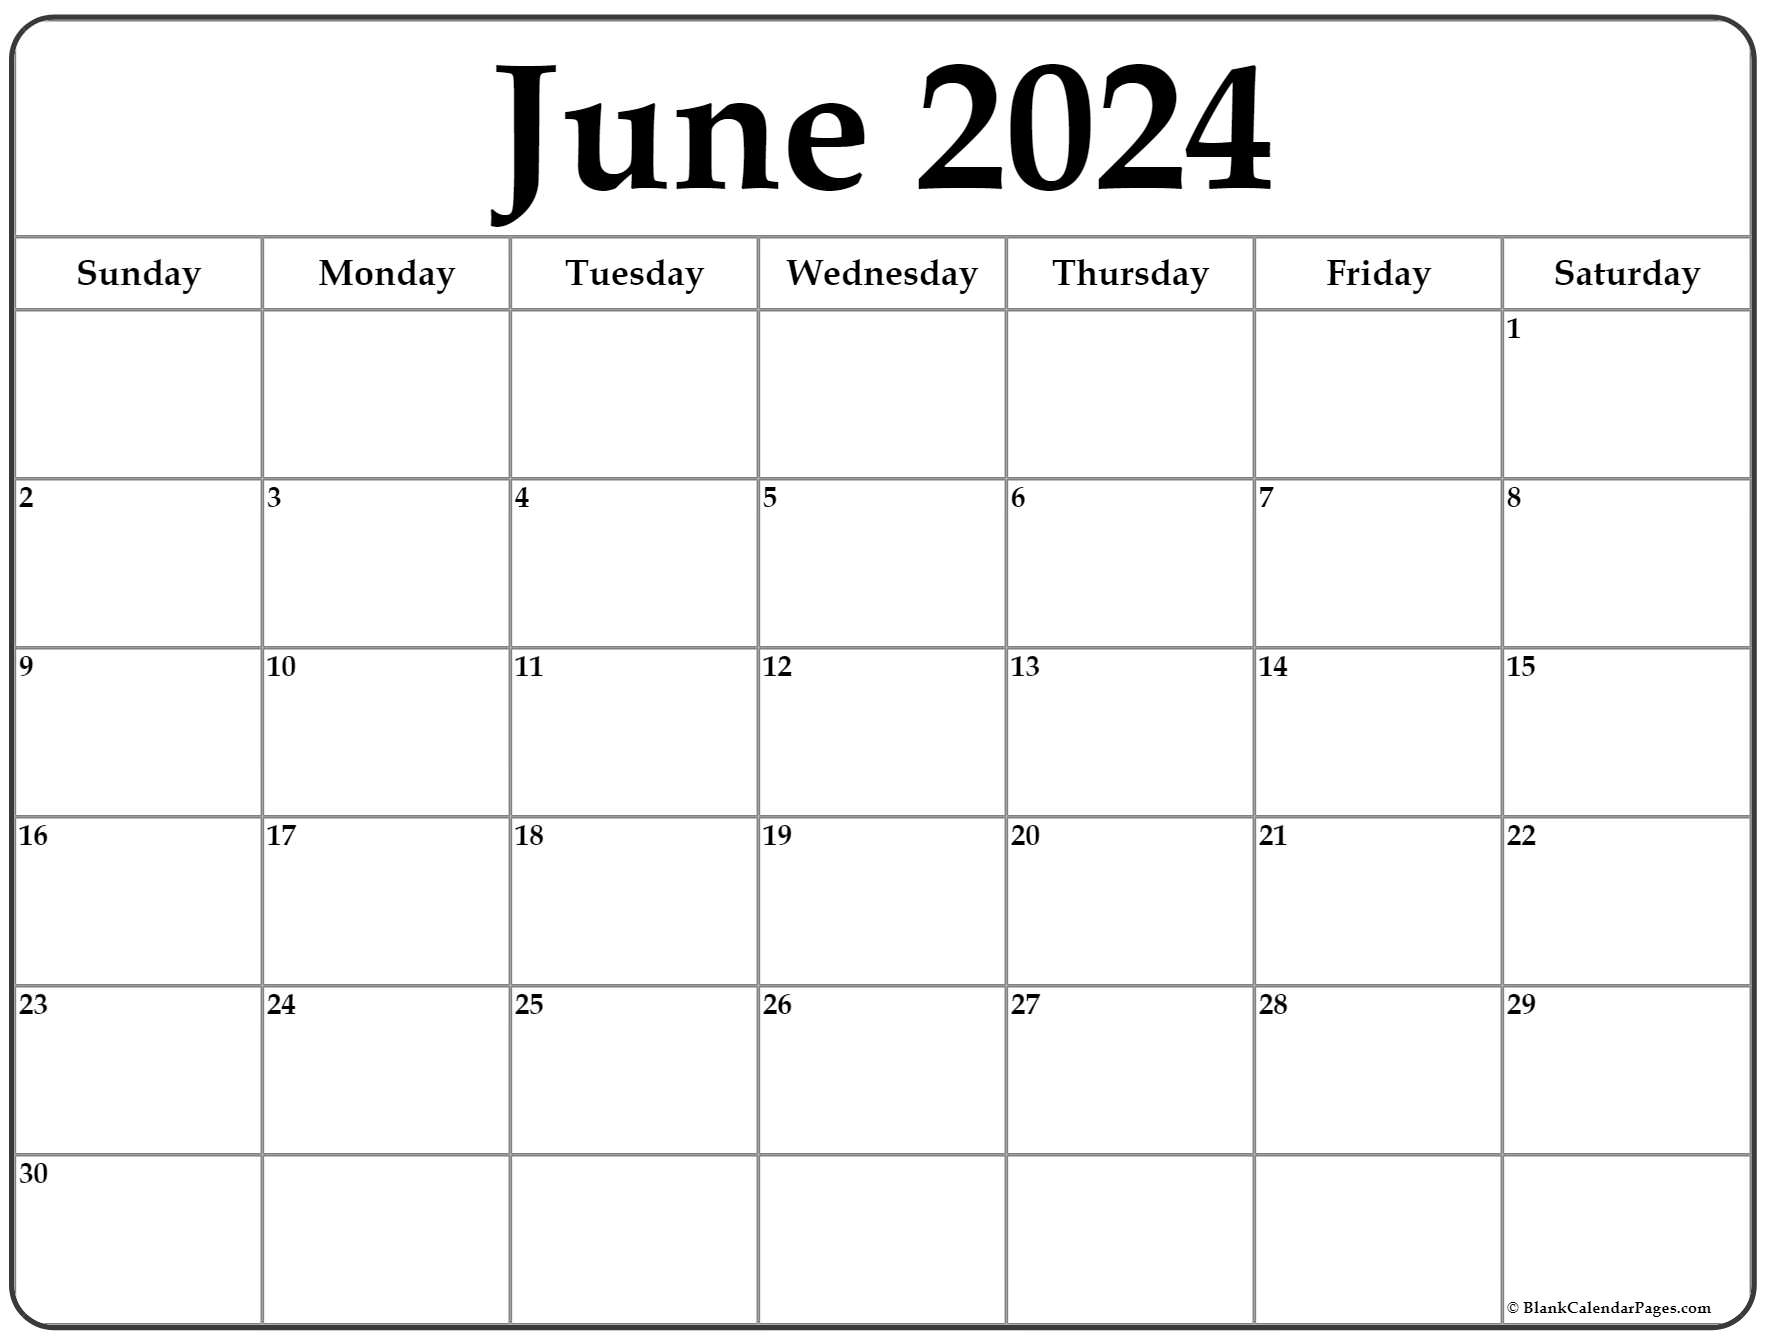 June And July Calendar 2022 June 2022 Calendar | Free Printable Calendar Templates